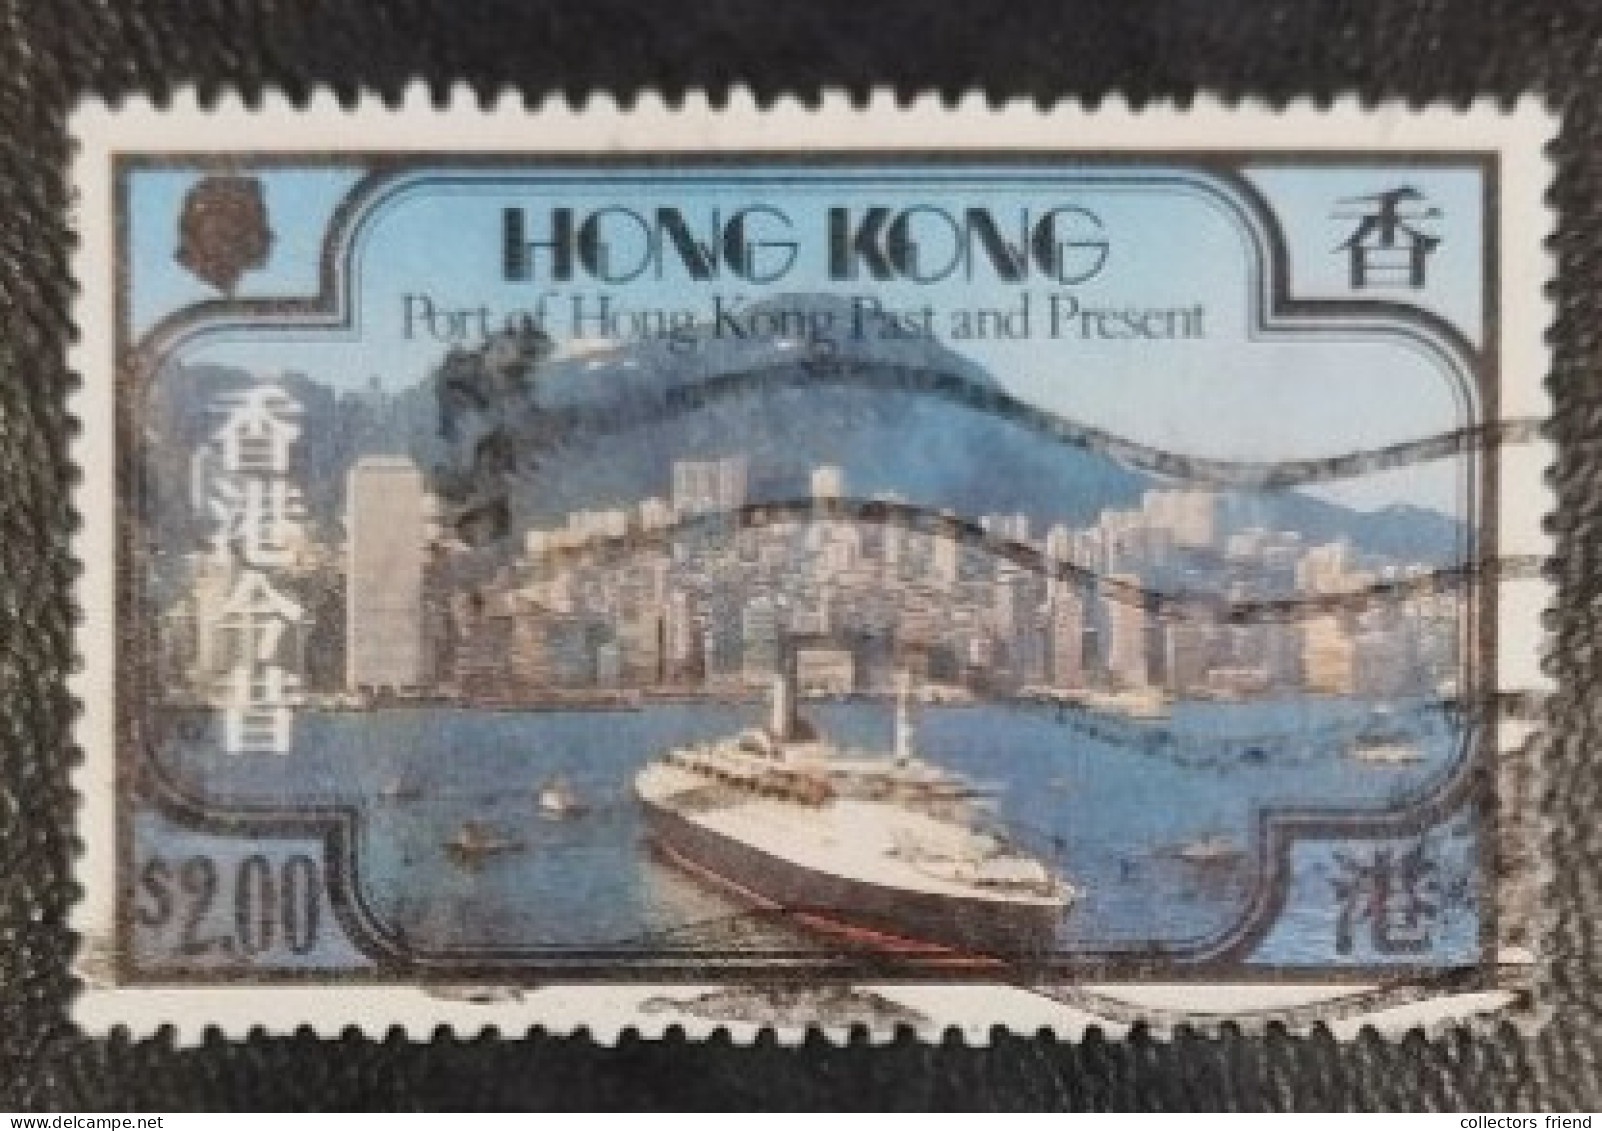 Hong Kong - 1982 - Hong Kong Port, Past And Present - Liner Queen Elizabeth 2 - Used - Gebruikt